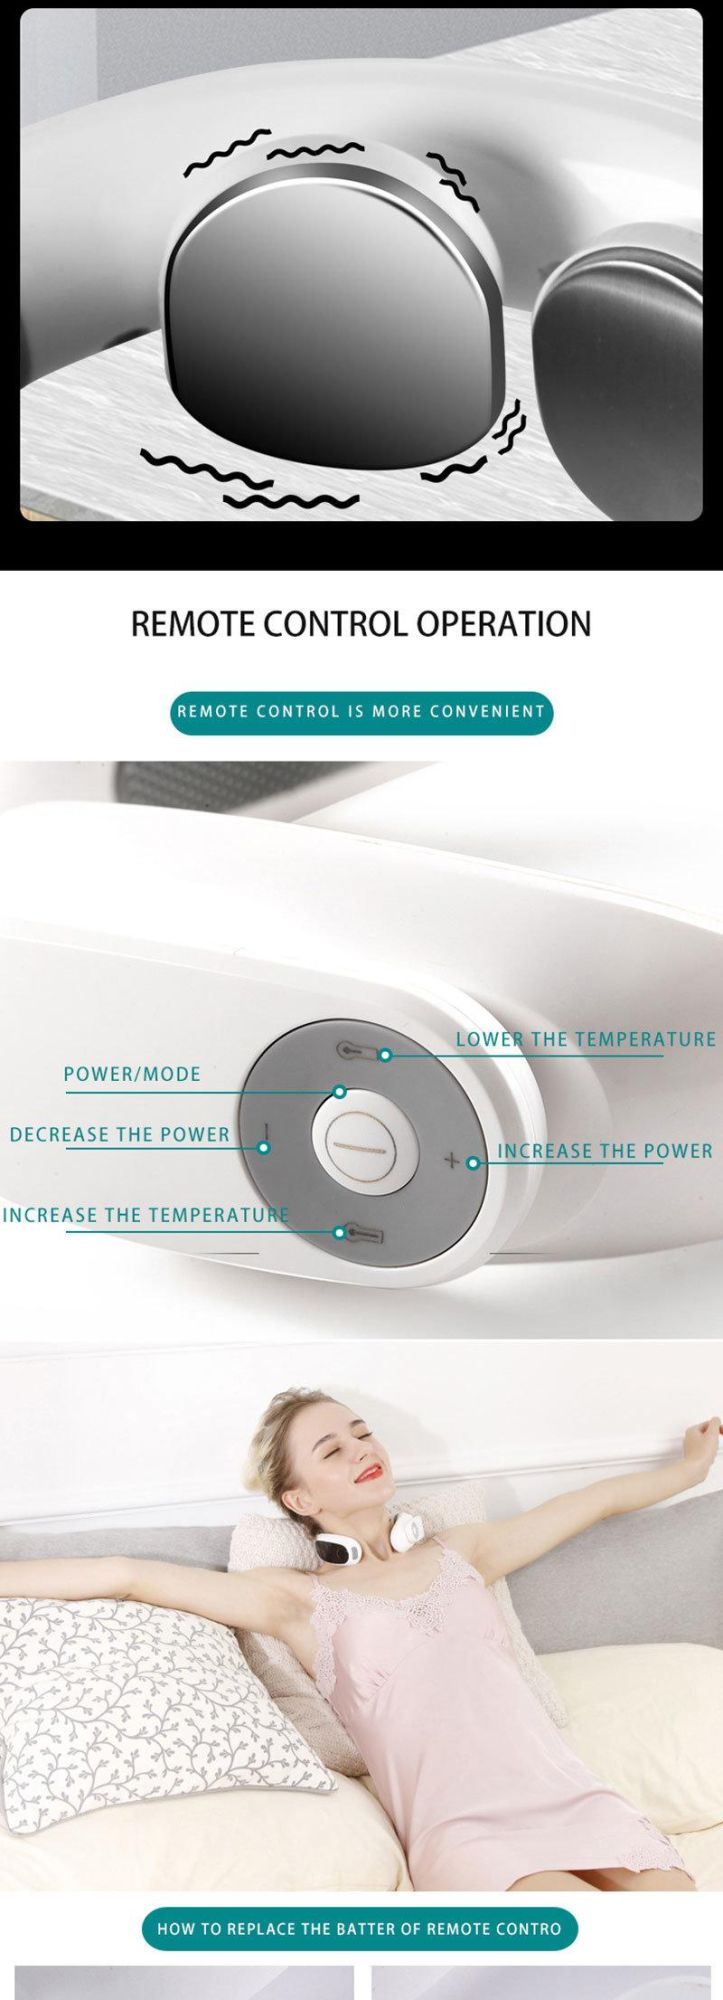 Hezheng Cervical Neck Massager Heated Portable Cordless Electric Neck Massage Equipment